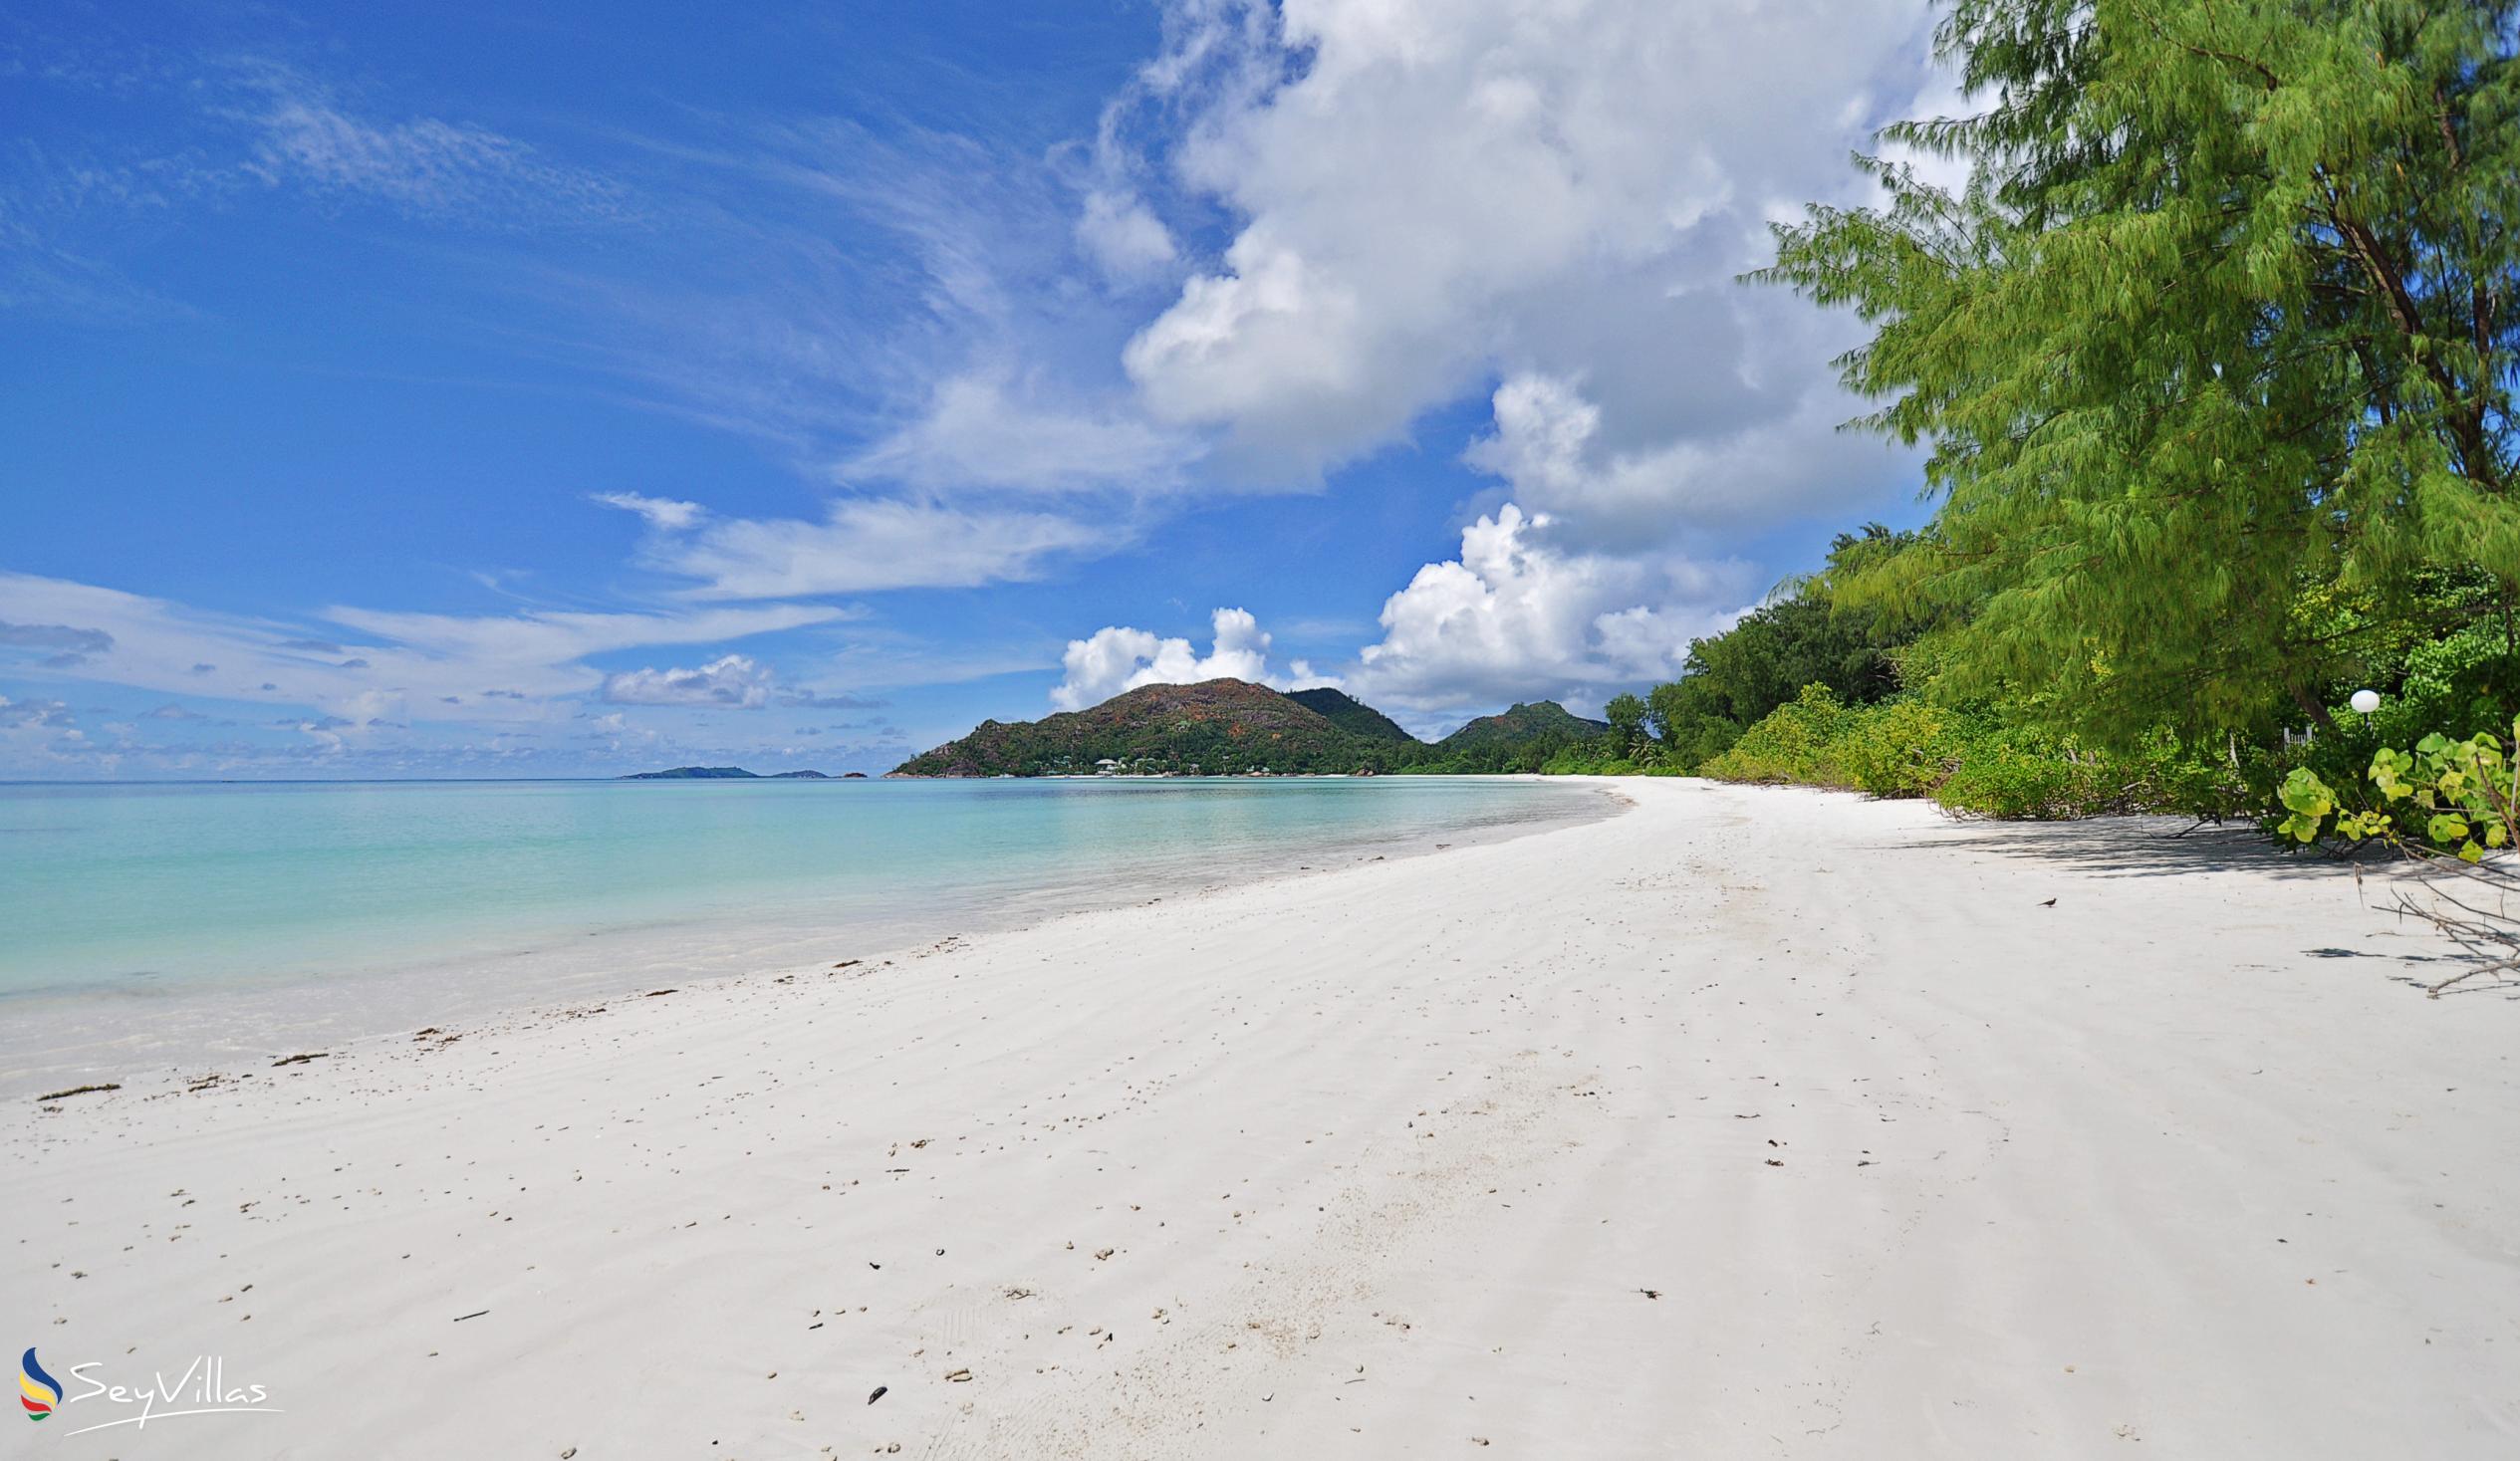 Photo 73: Cote d'Or Footprints - Beaches - Praslin (Seychelles)